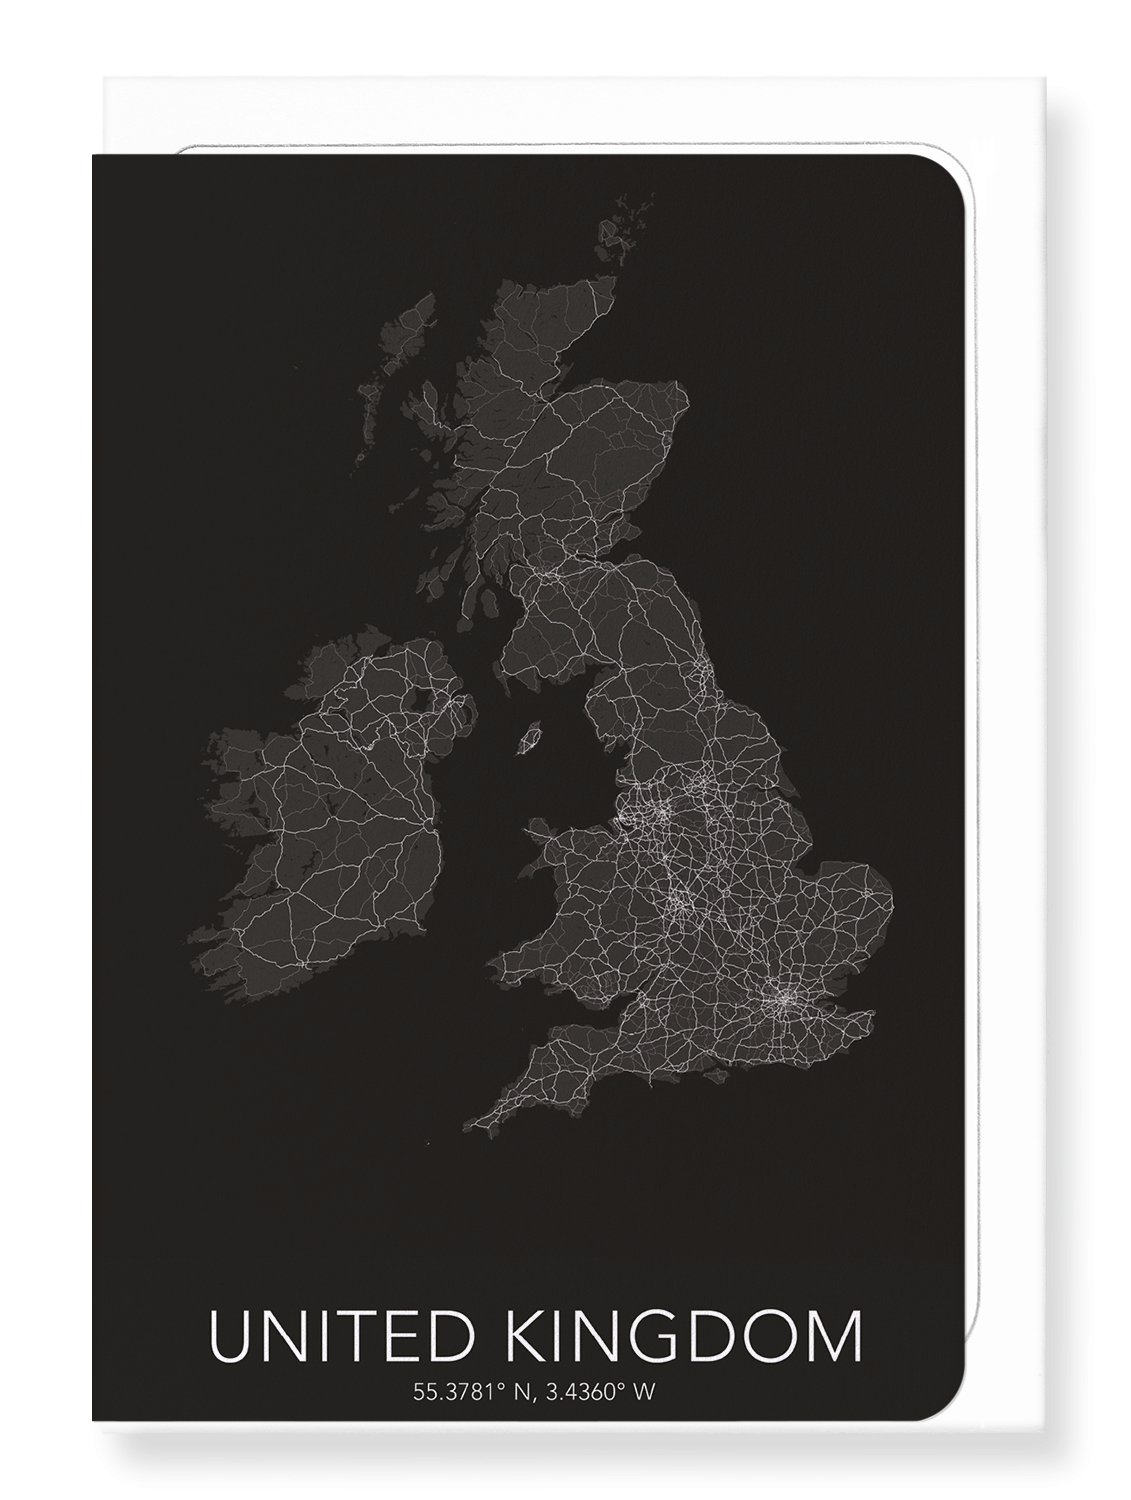 UNITED KINGDOM FULL MAP: Map Full Greeting Card